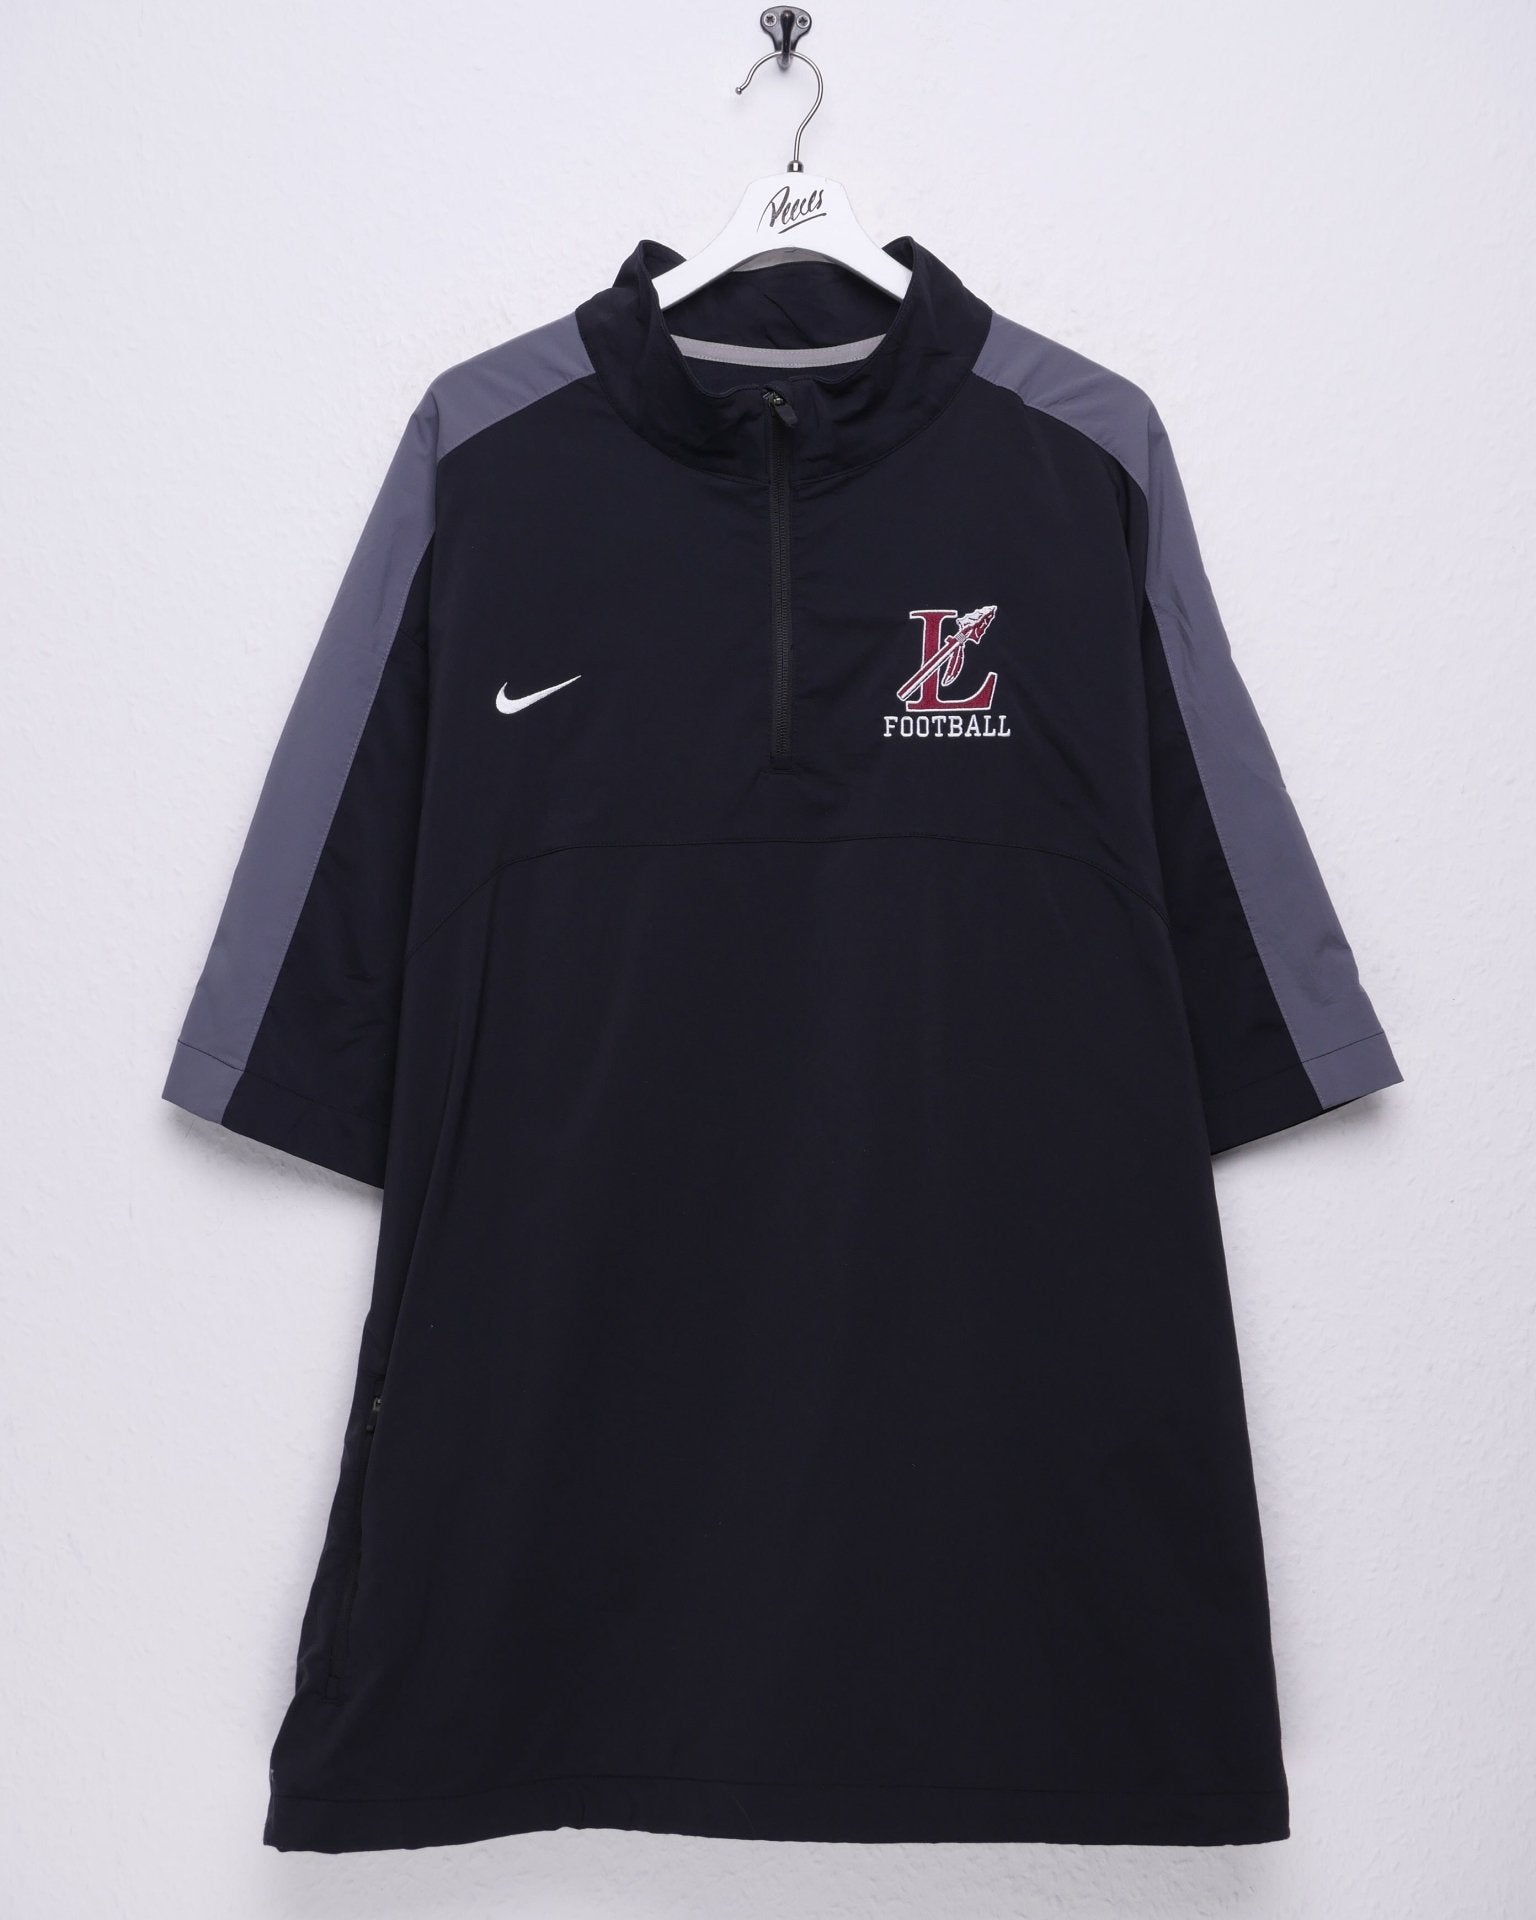 Nike embroidered Football Logo Vintage Half Zip Jersey Shirt - Peeces